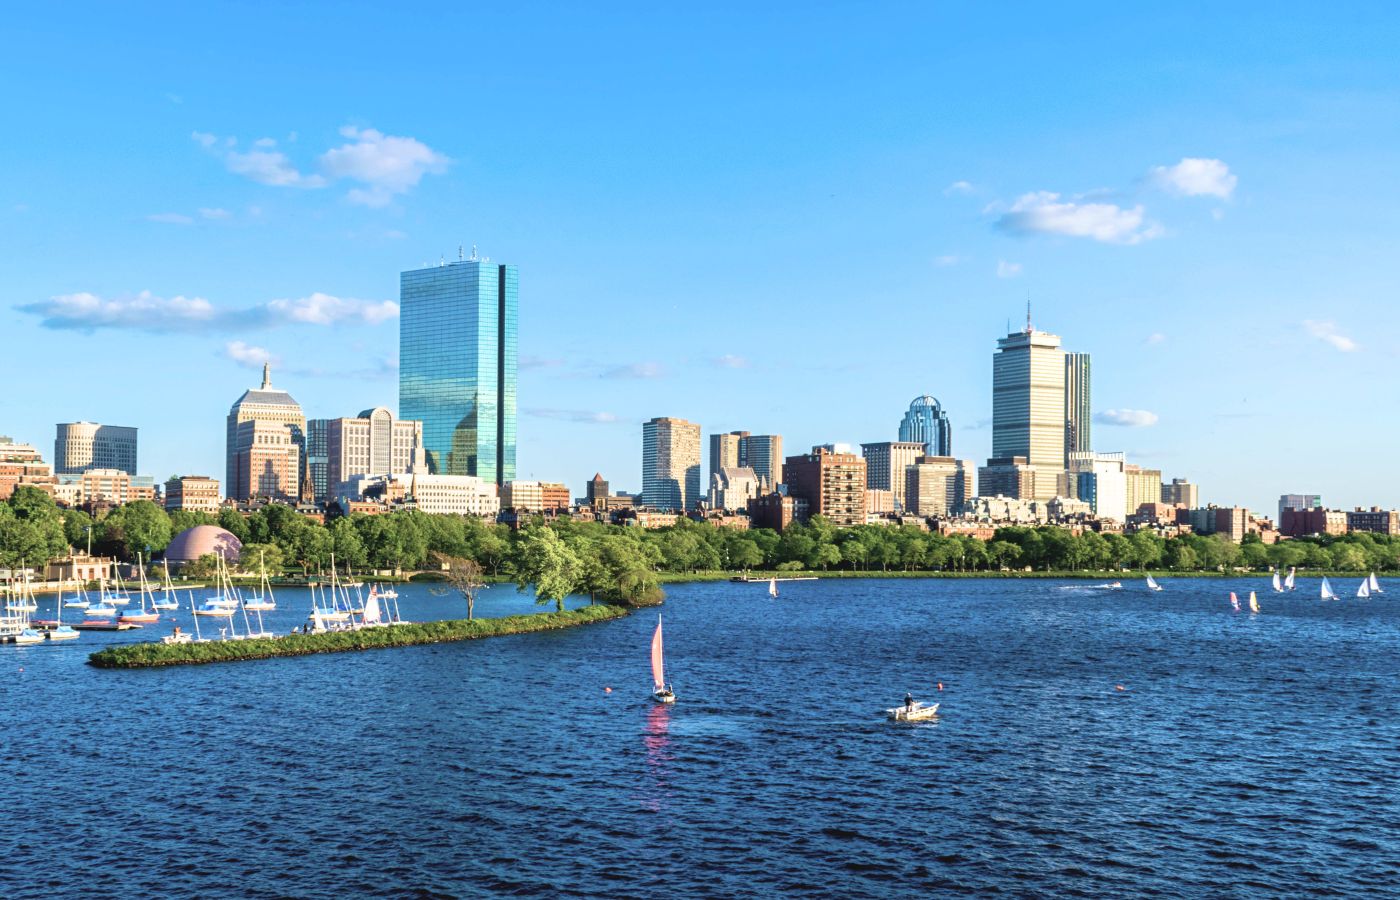 The Boston skyline.